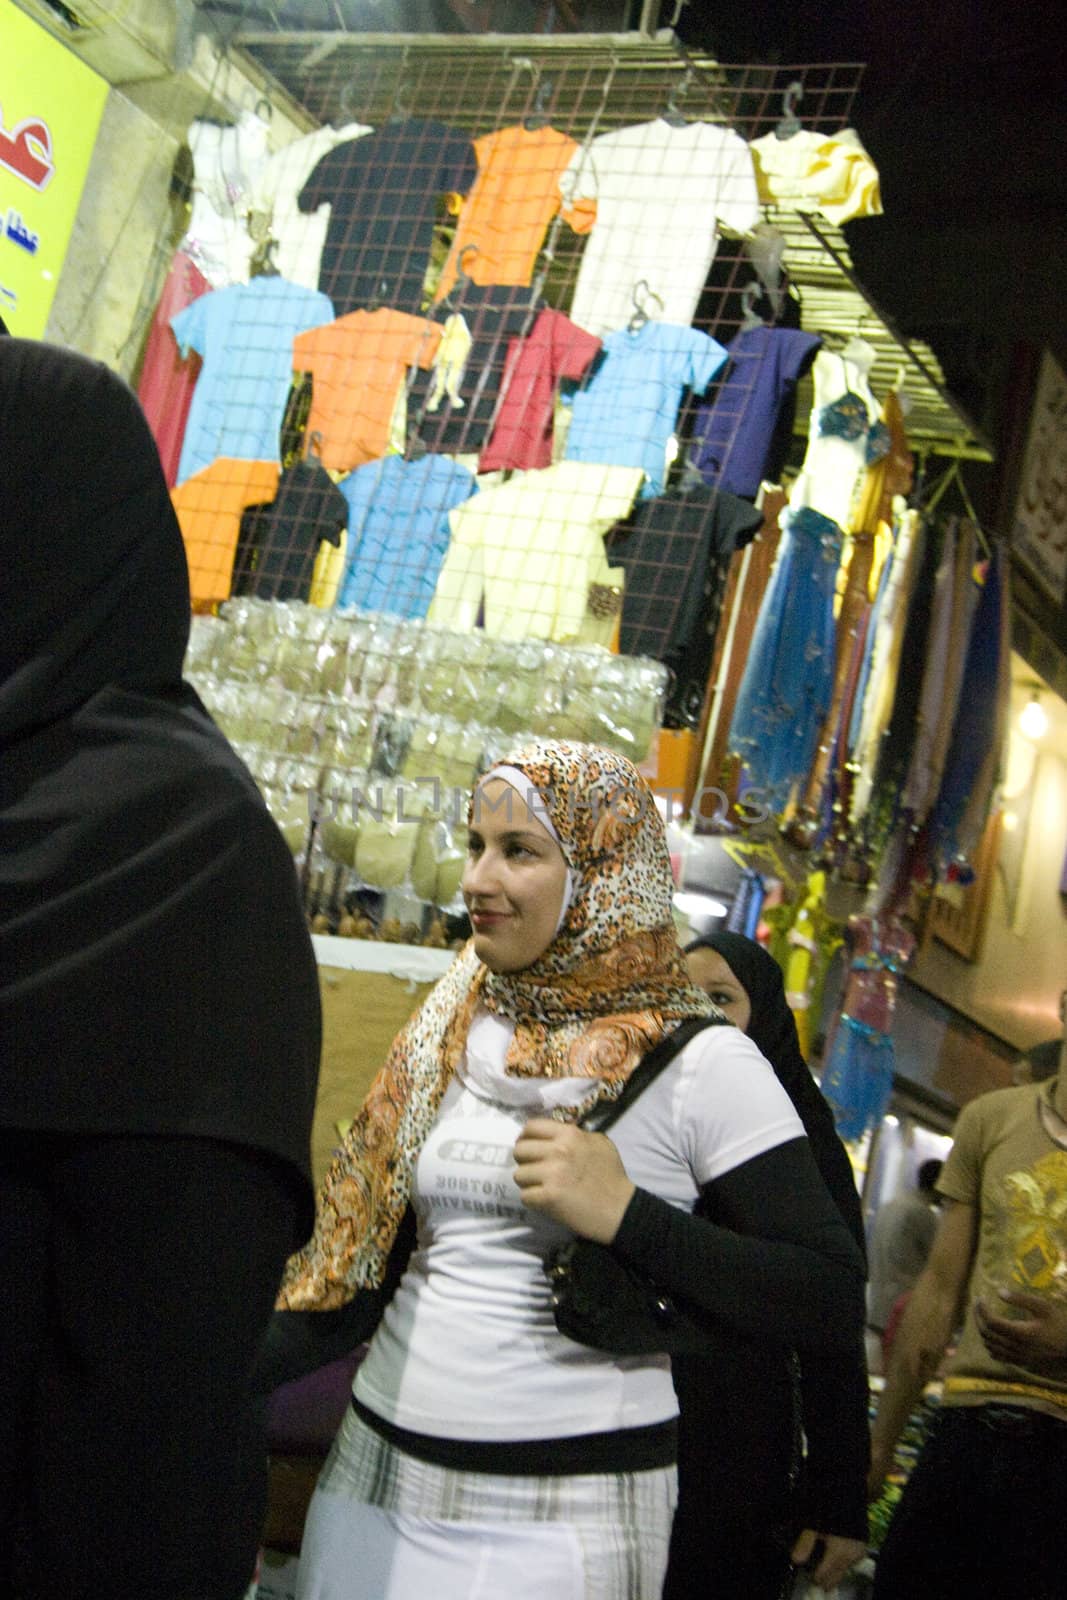 Khan El-Khalili Bazaar in Cairo by MihaiDancaescu